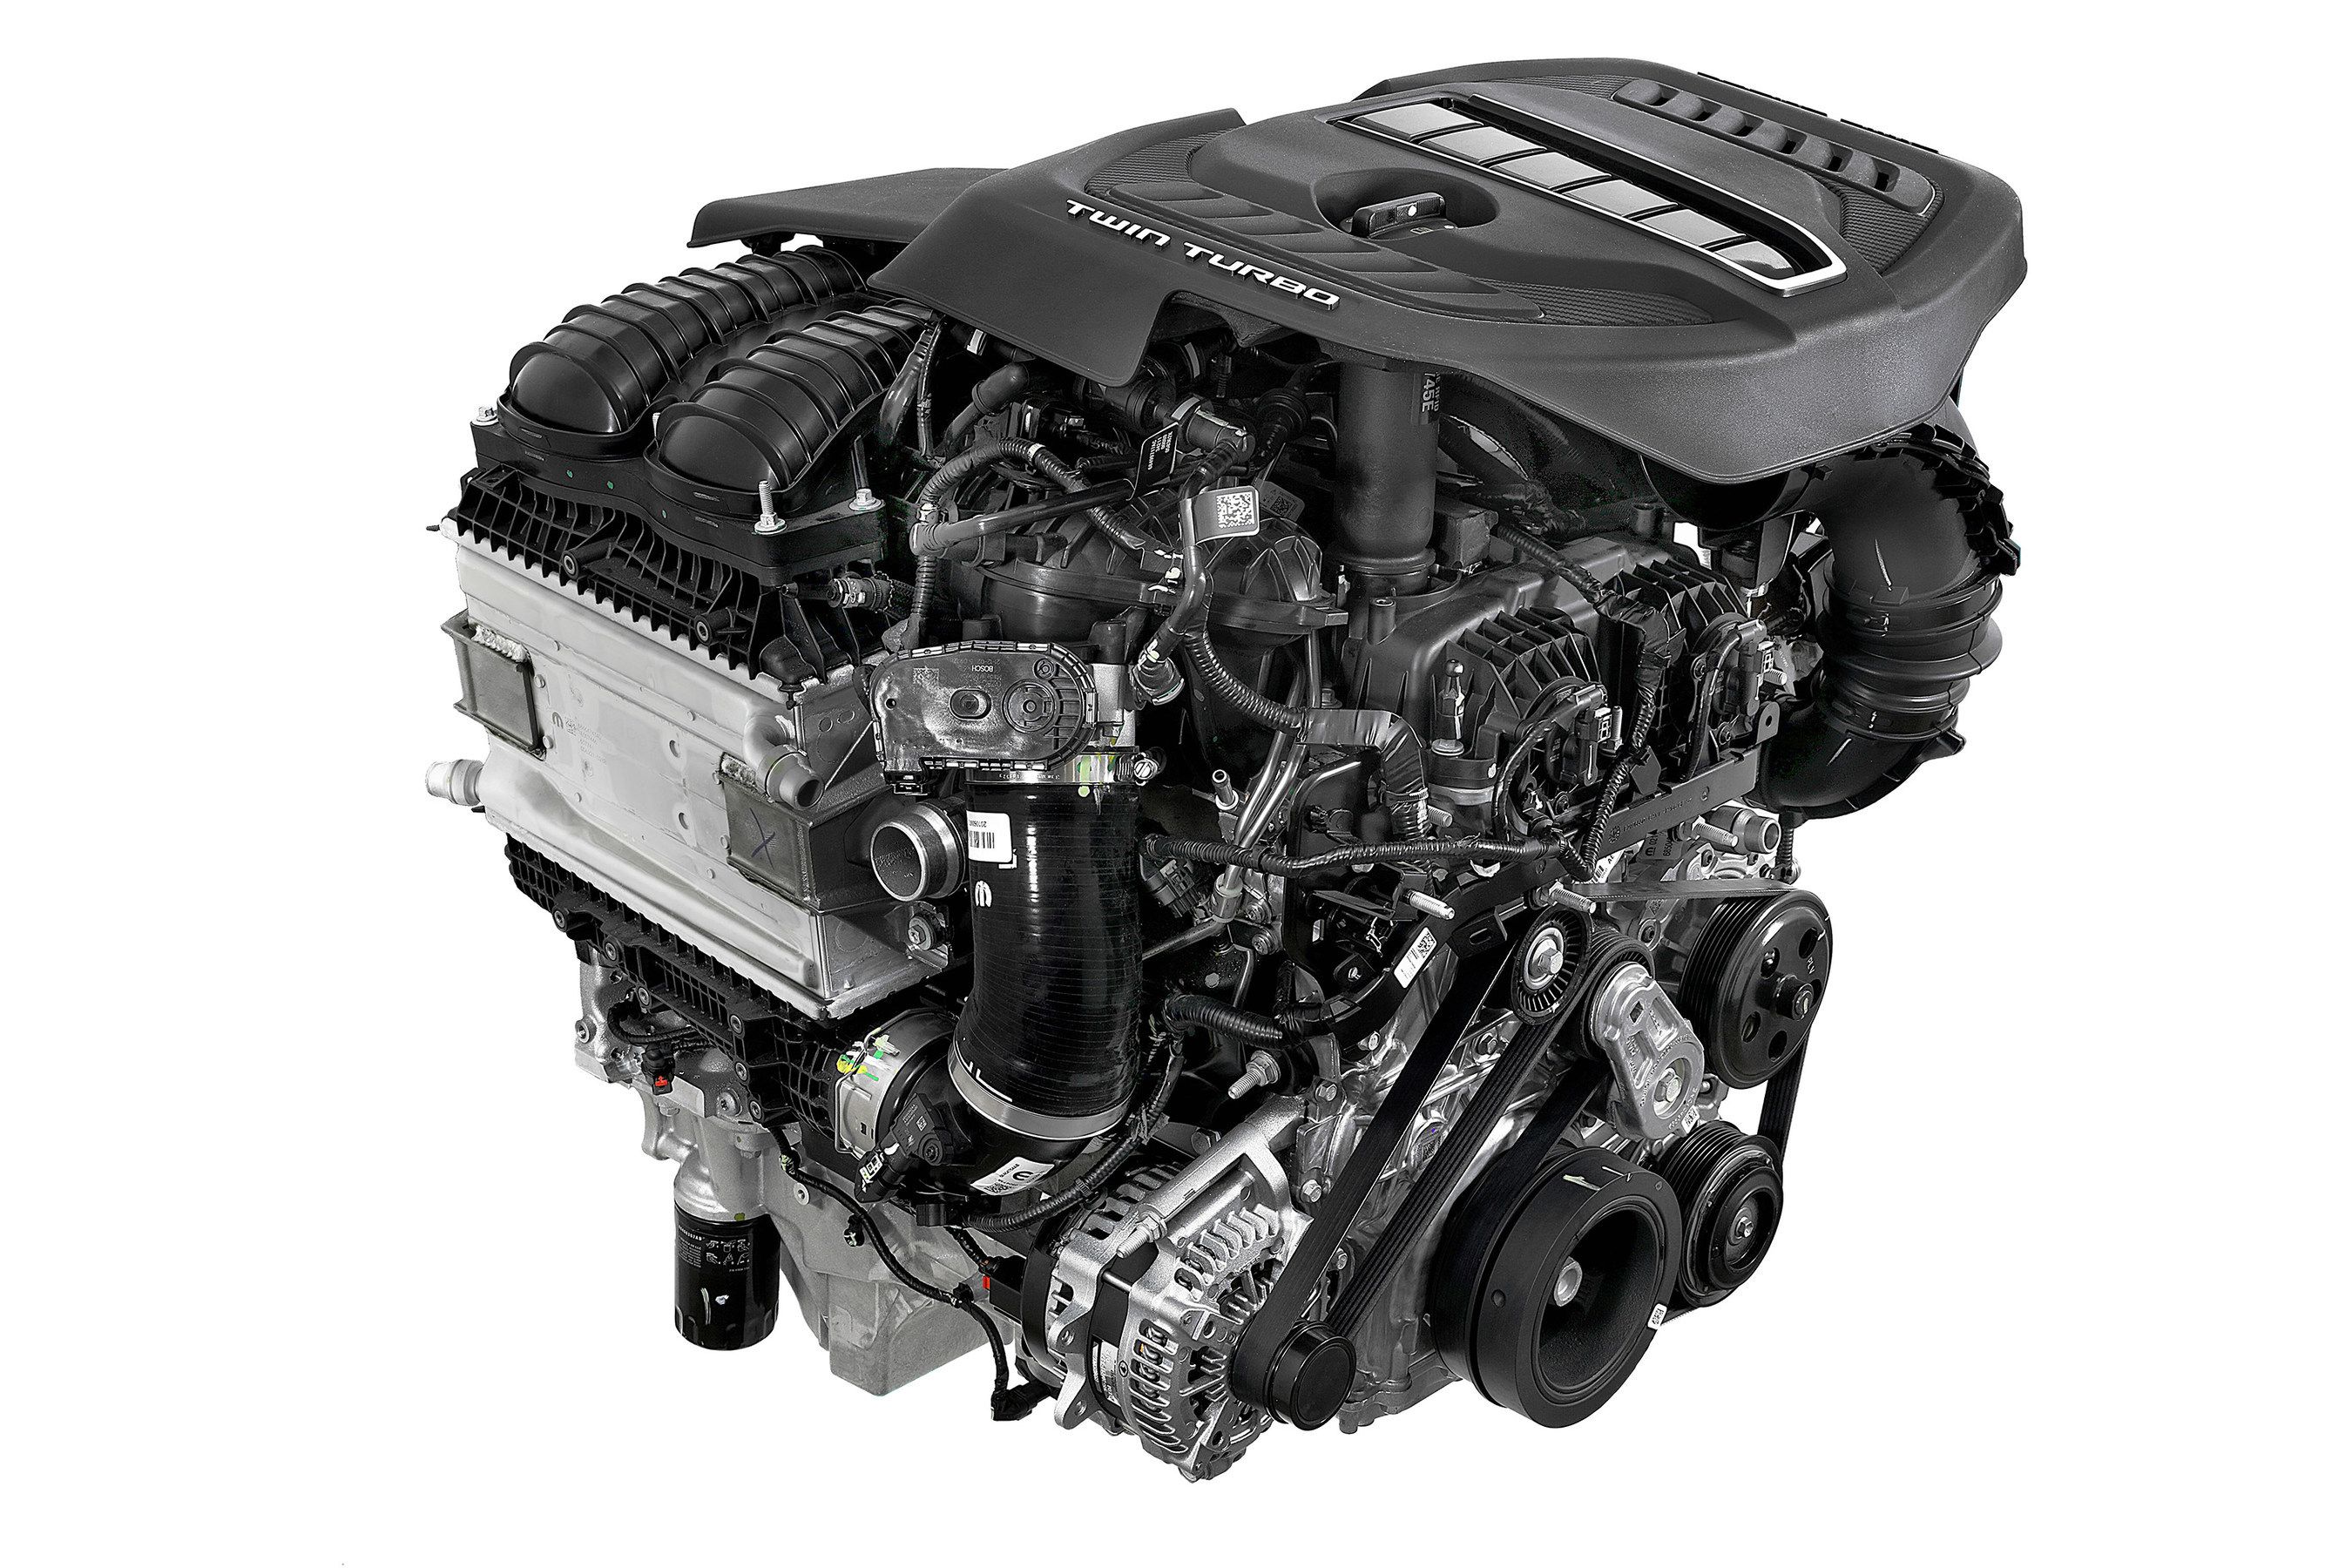 Chrysler Straight-Six ‘Hurricane’ Engine